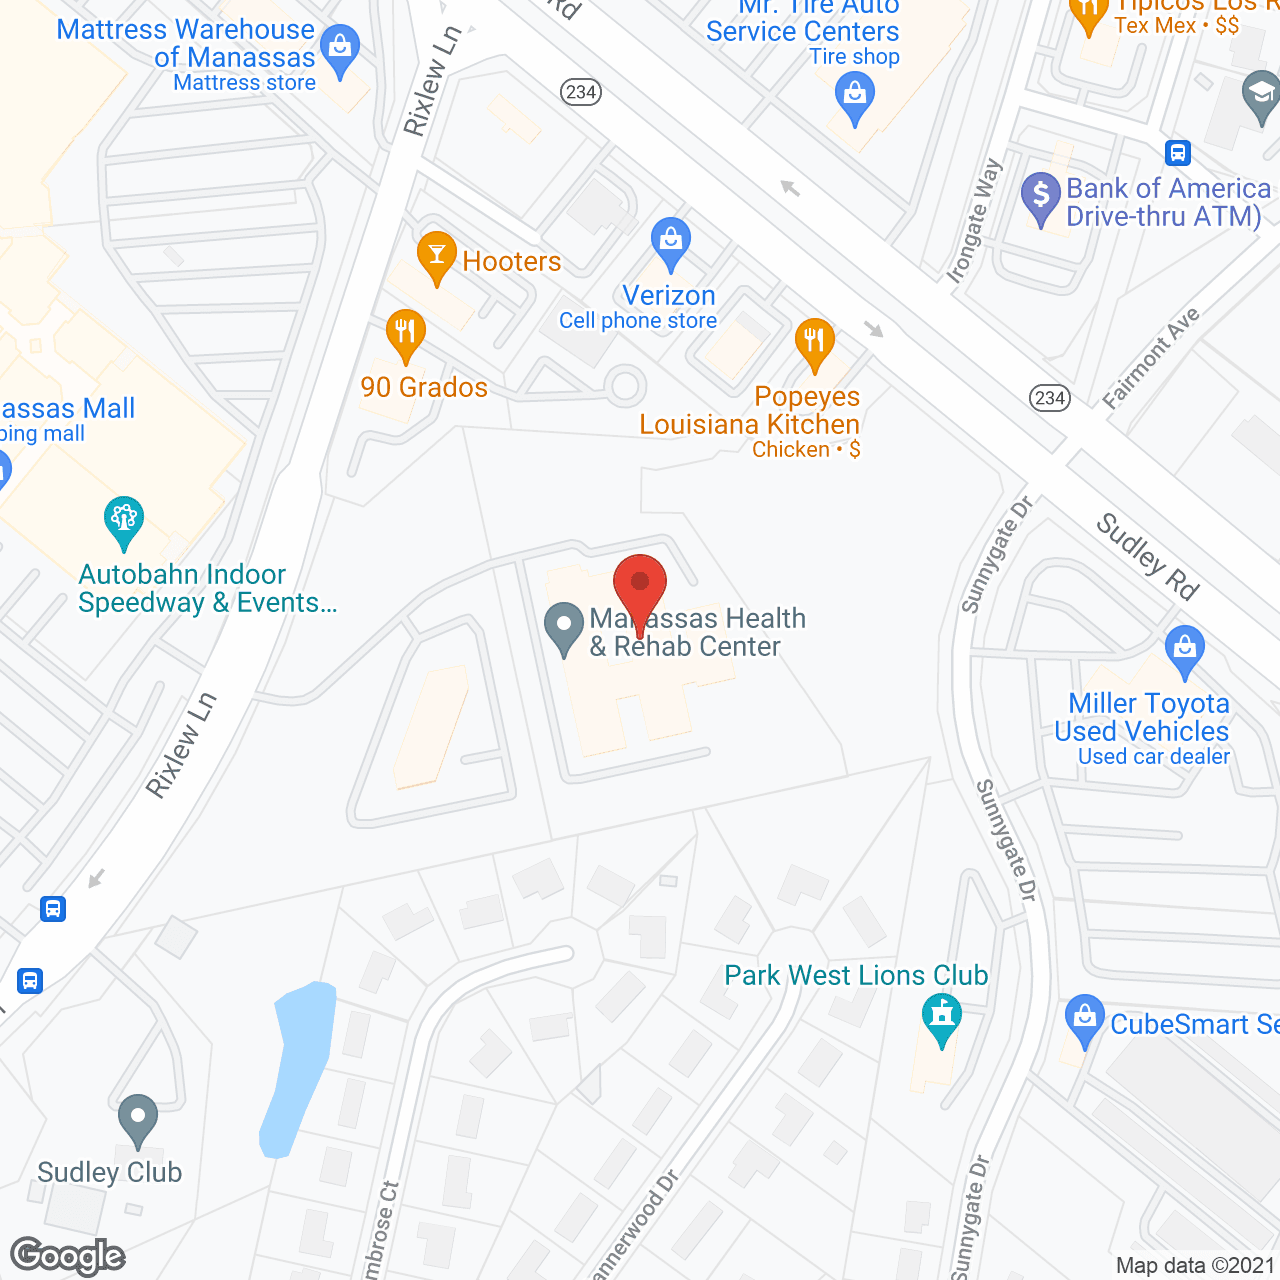 Manassas Health & Rehab Center in google map